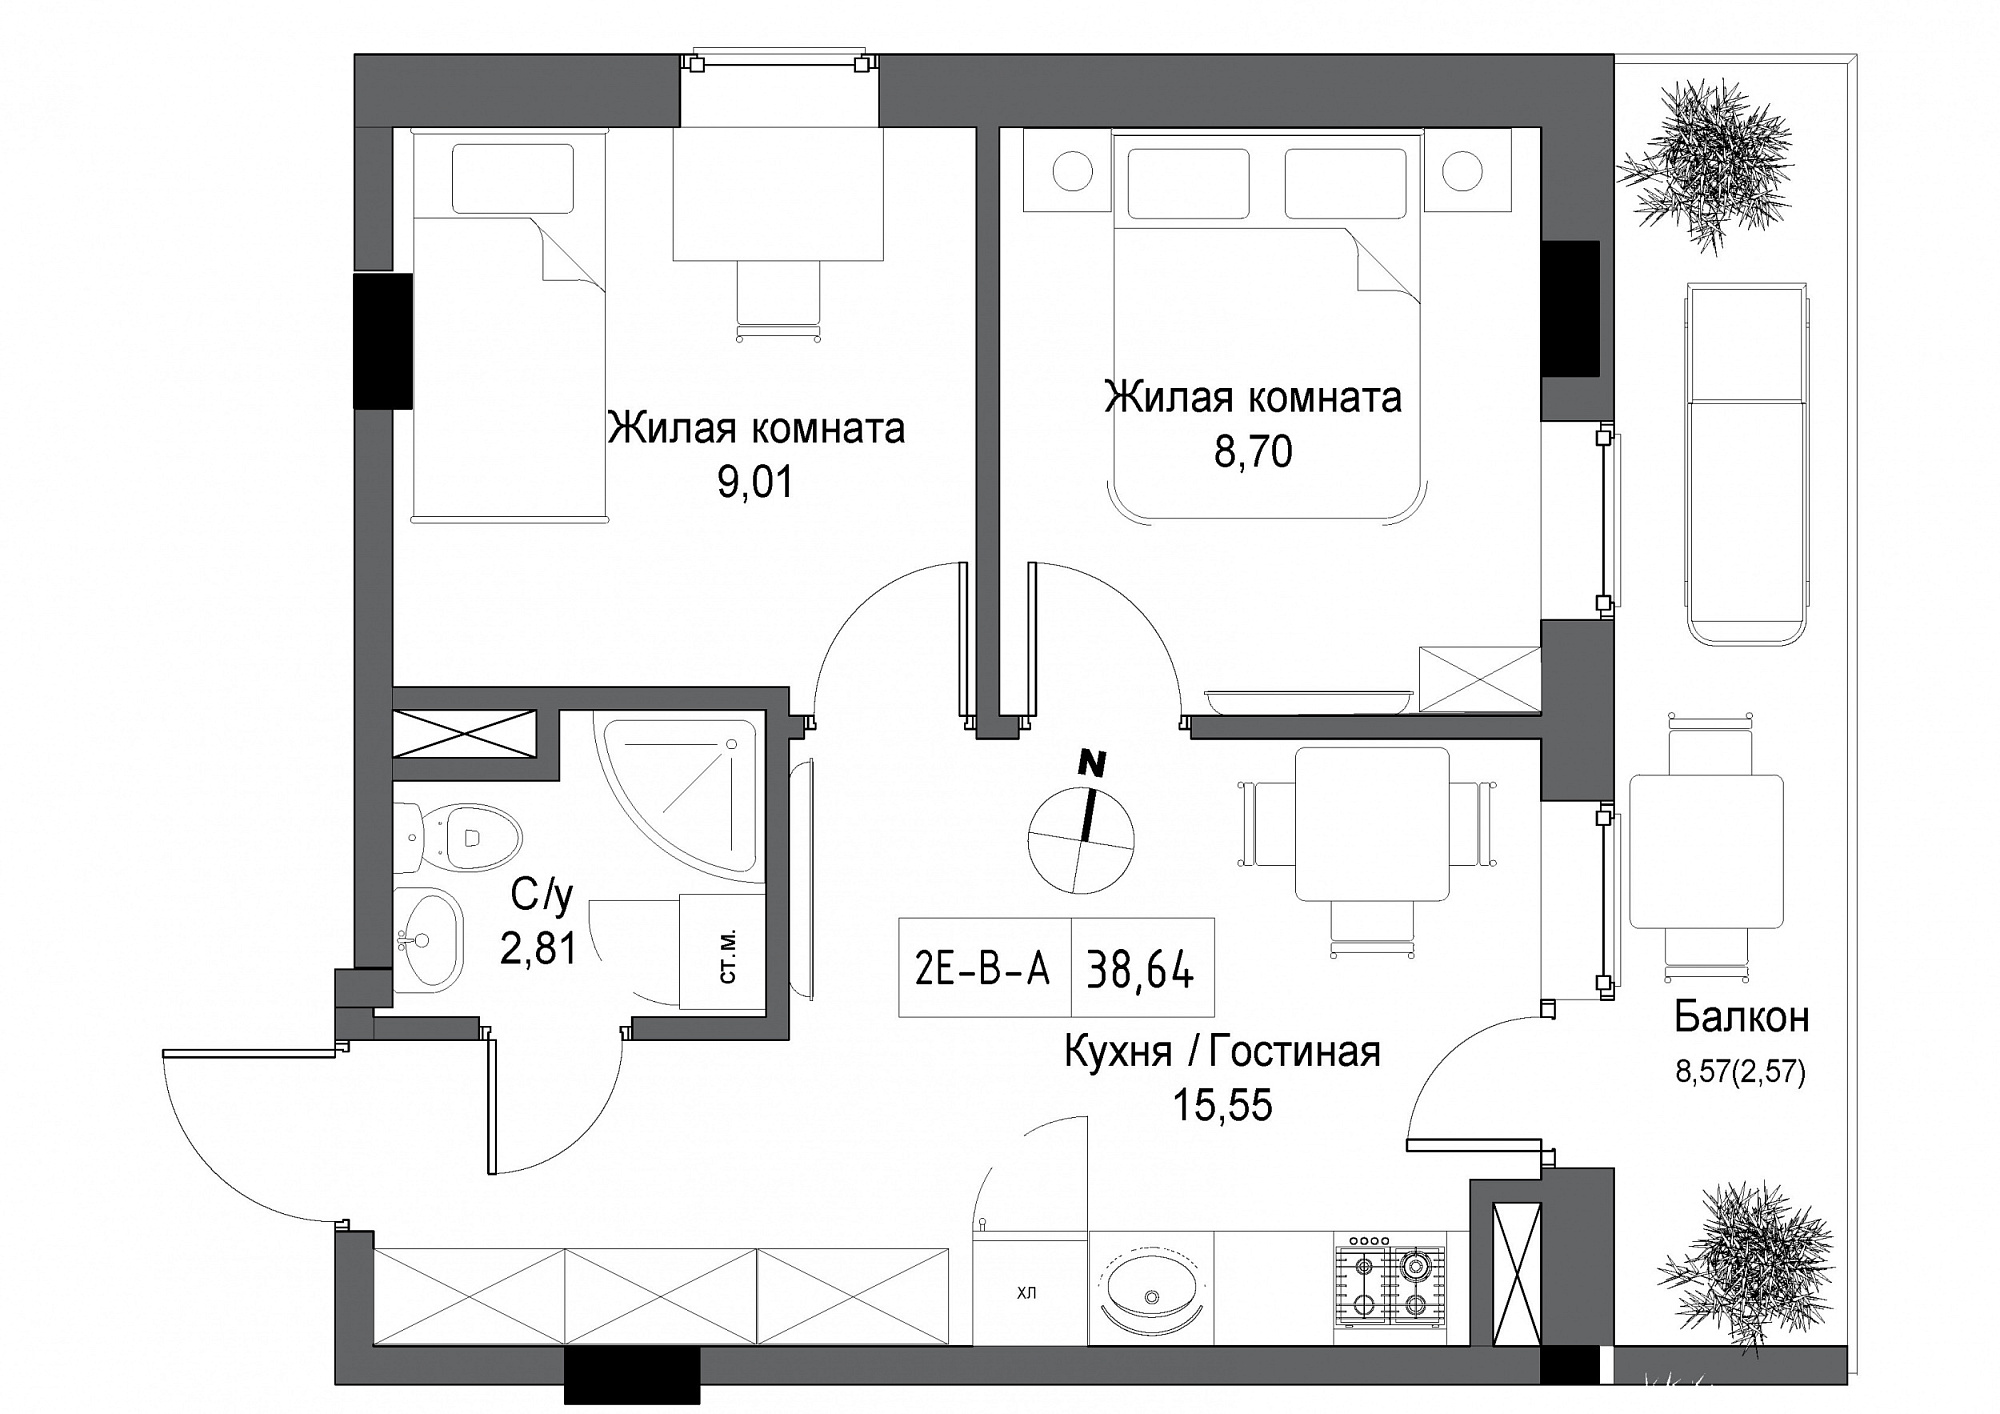 Planning 2-rm flats area 38.64m2, UM-004-07/0005.